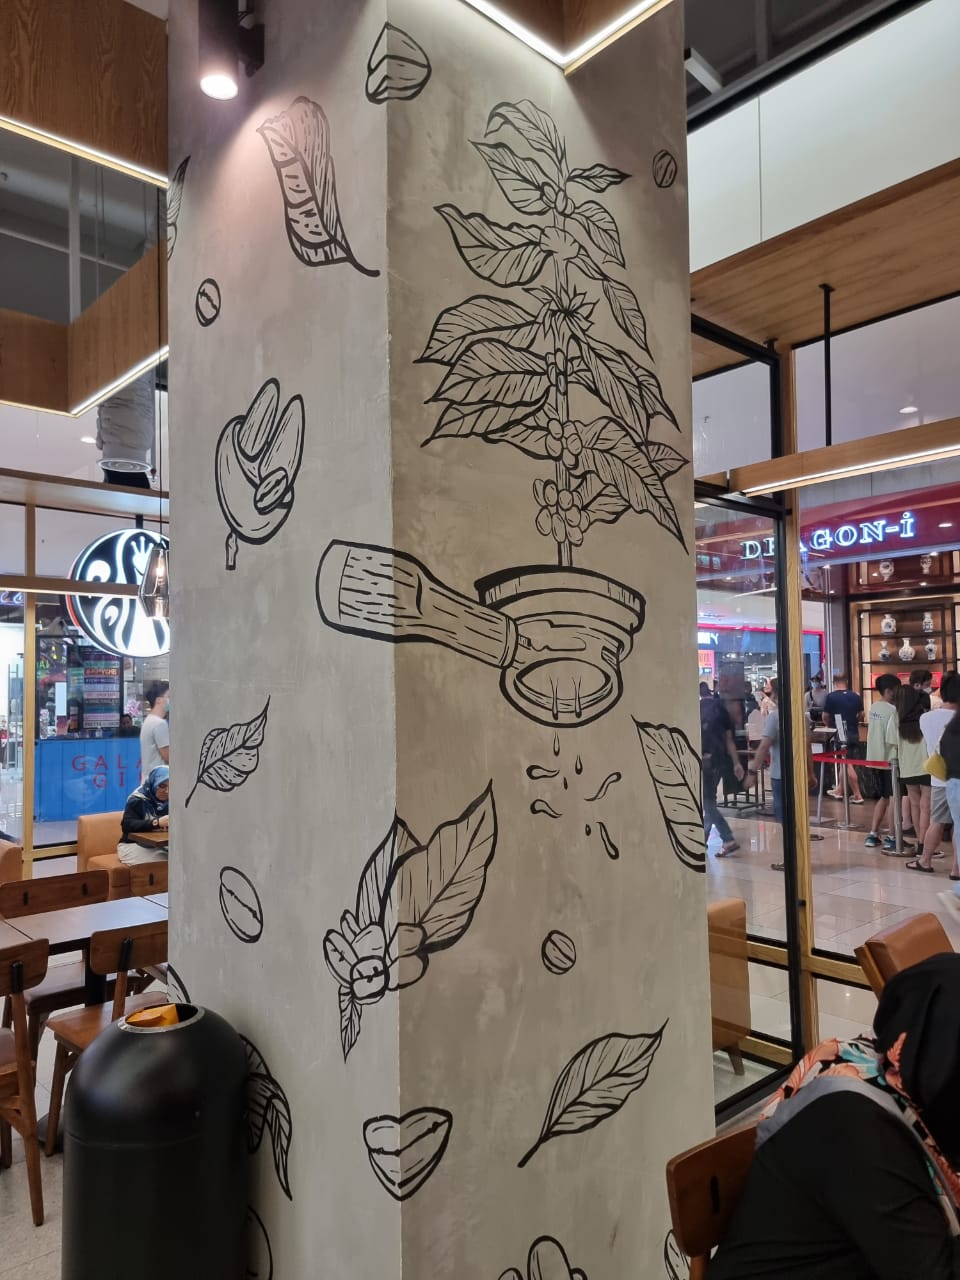 Affordable Mural Art Coffee Cup And Doughnut in J.CO Doughnut In Putrajaya